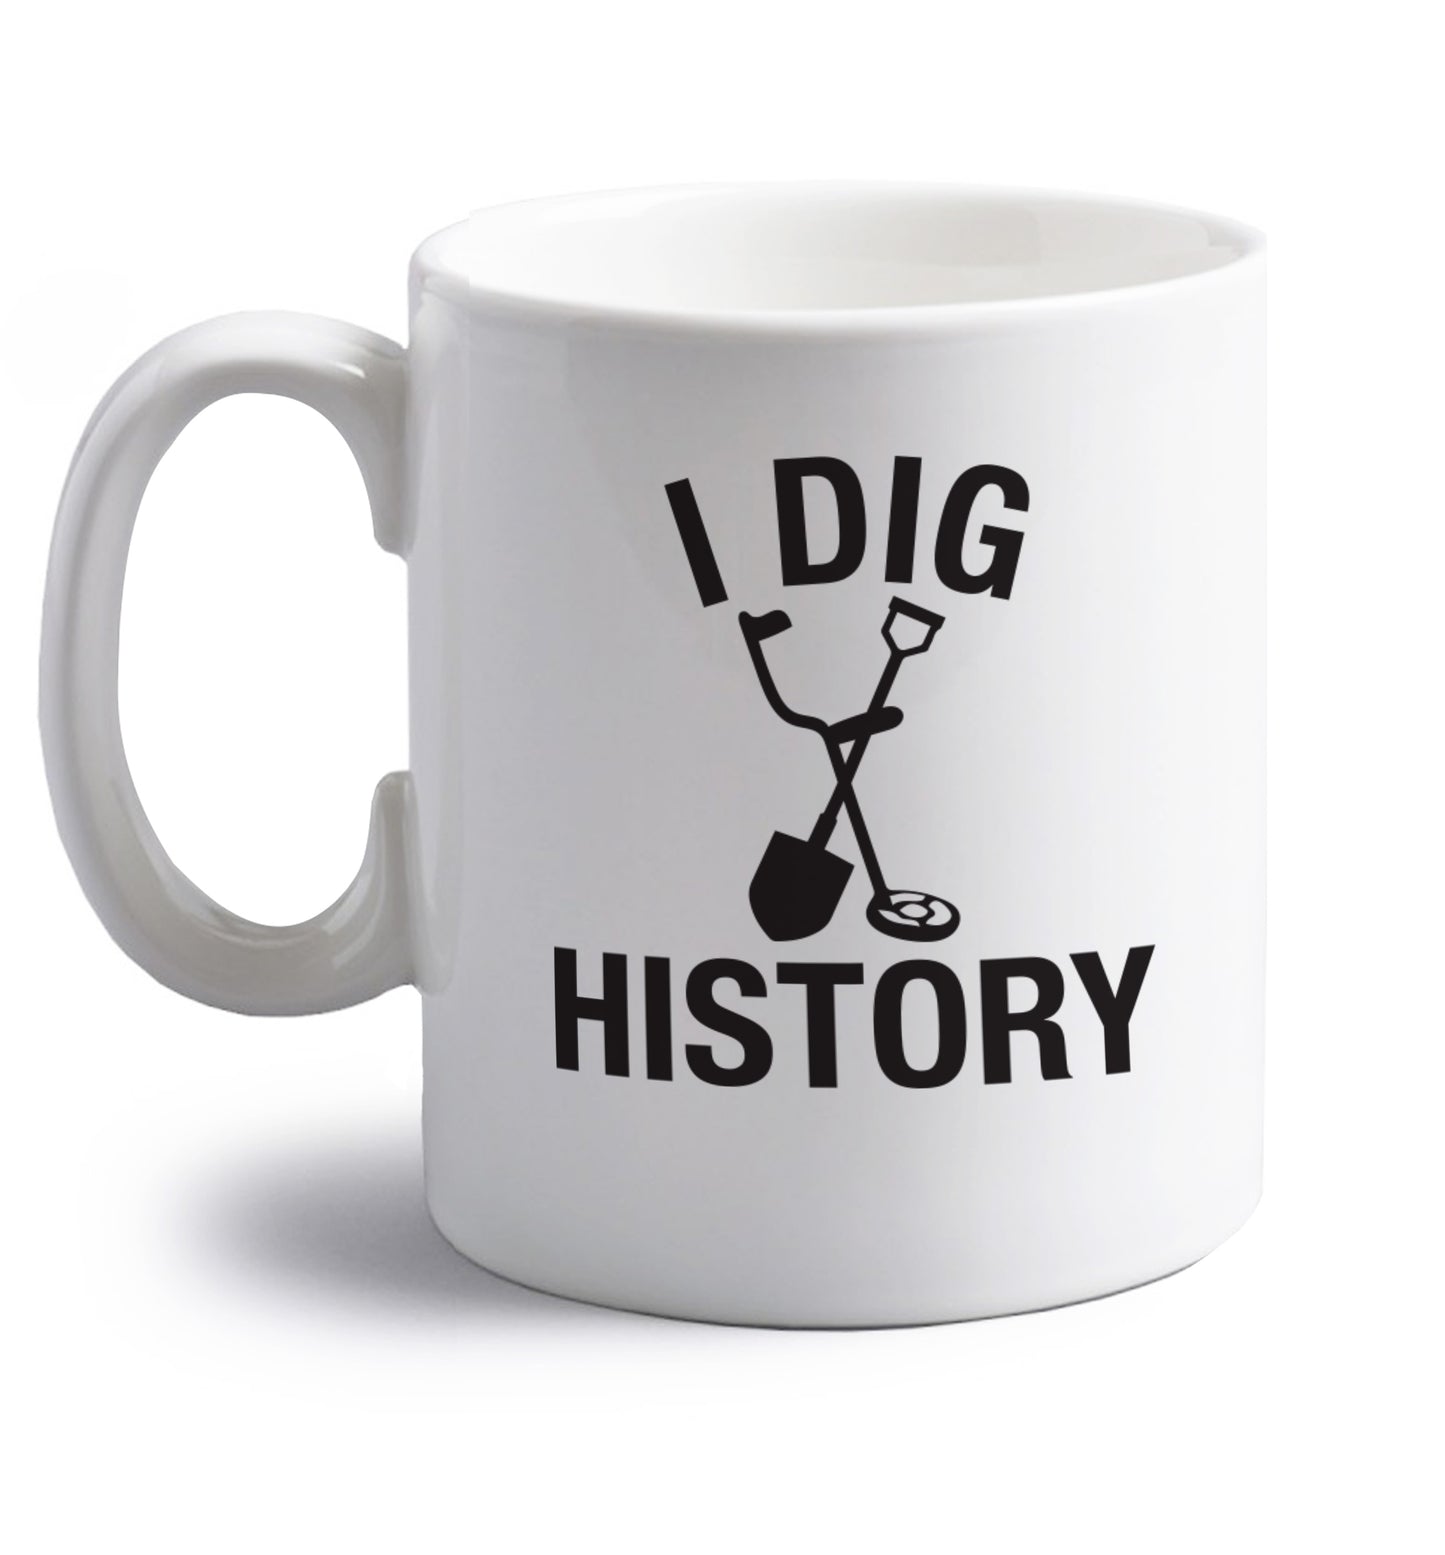 I dig history right handed white ceramic mug 